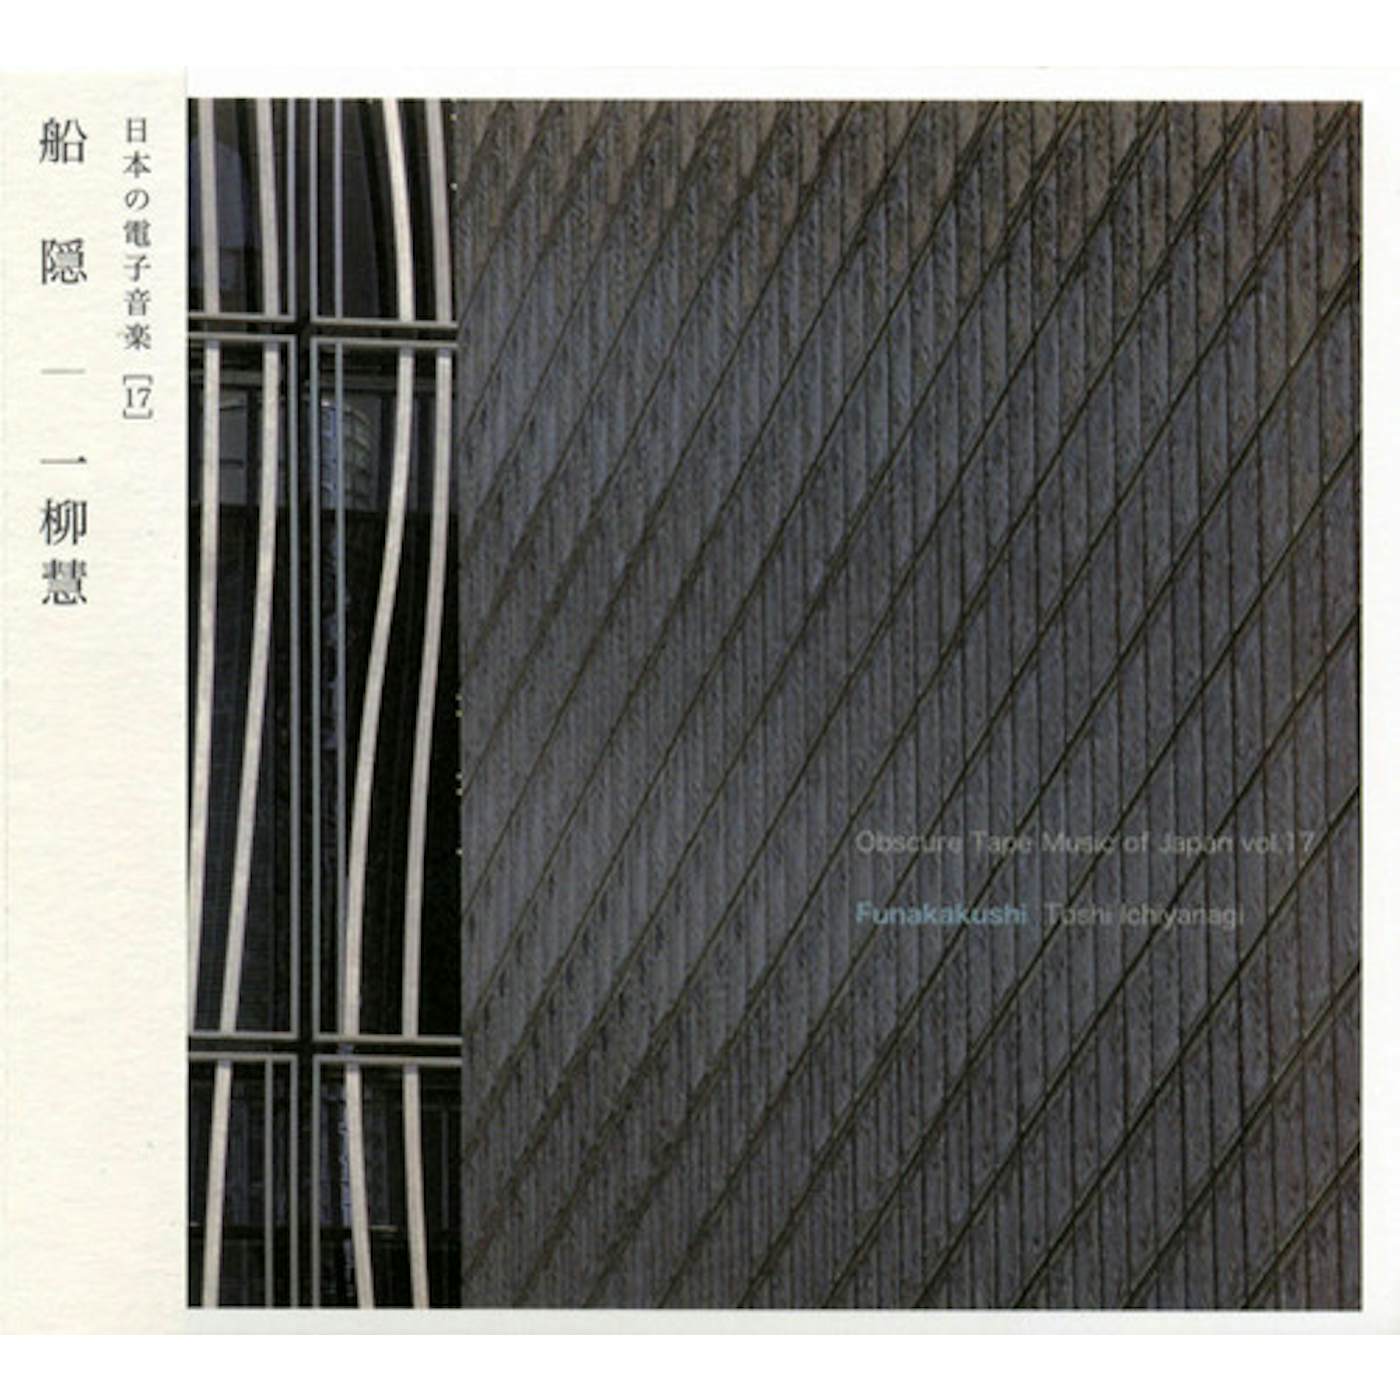 Toshi Ichiyanagi OBSCURE TAPE MUSIC OF JAPAN VOL.17: FUNAKAKUSHI CD